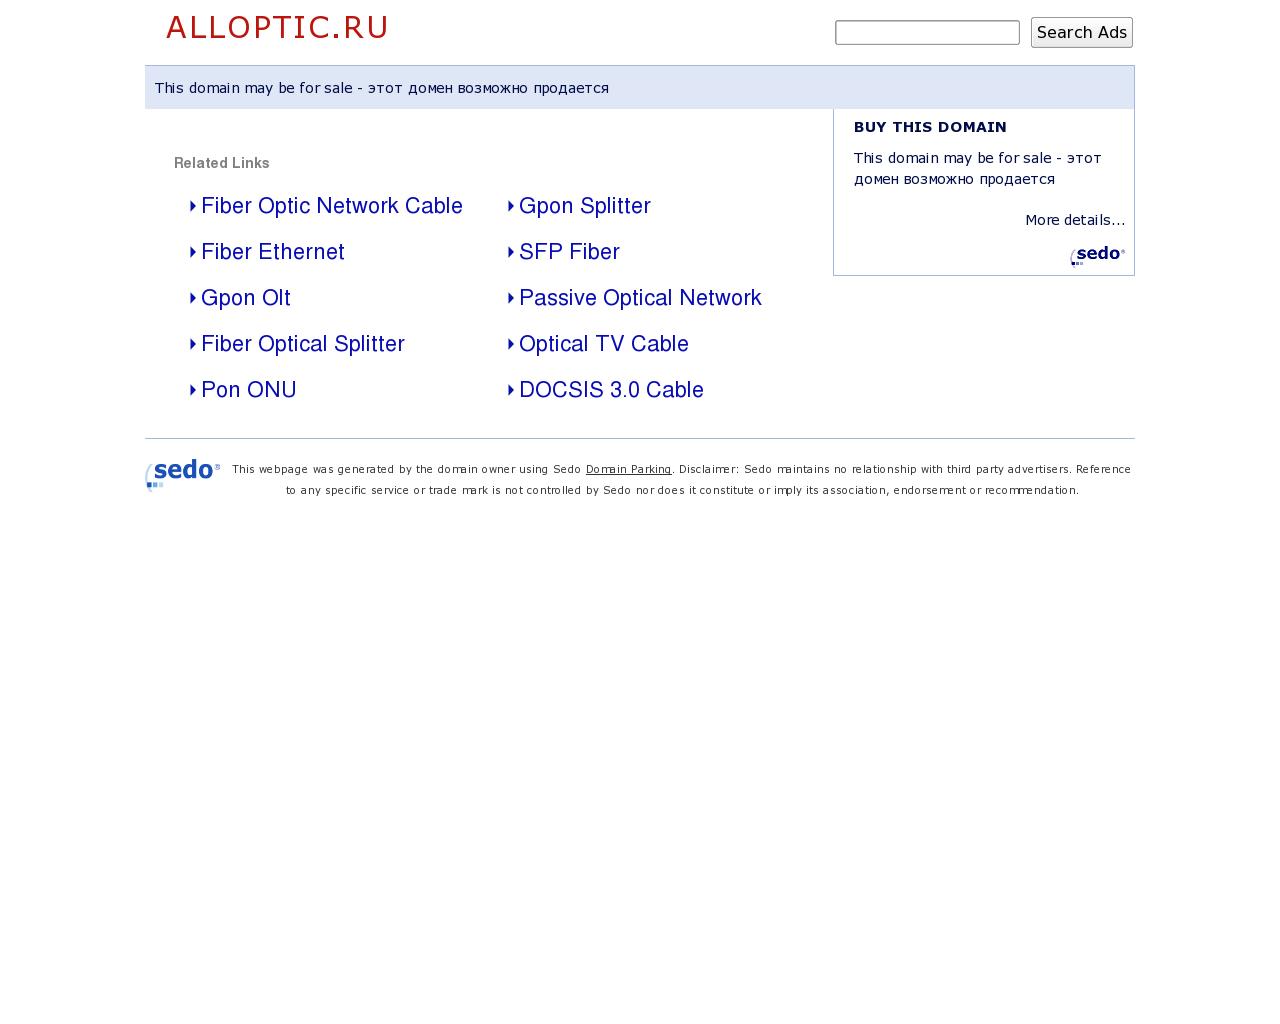 Изображение сайта alloptic.ru в разрешении 1280x1024